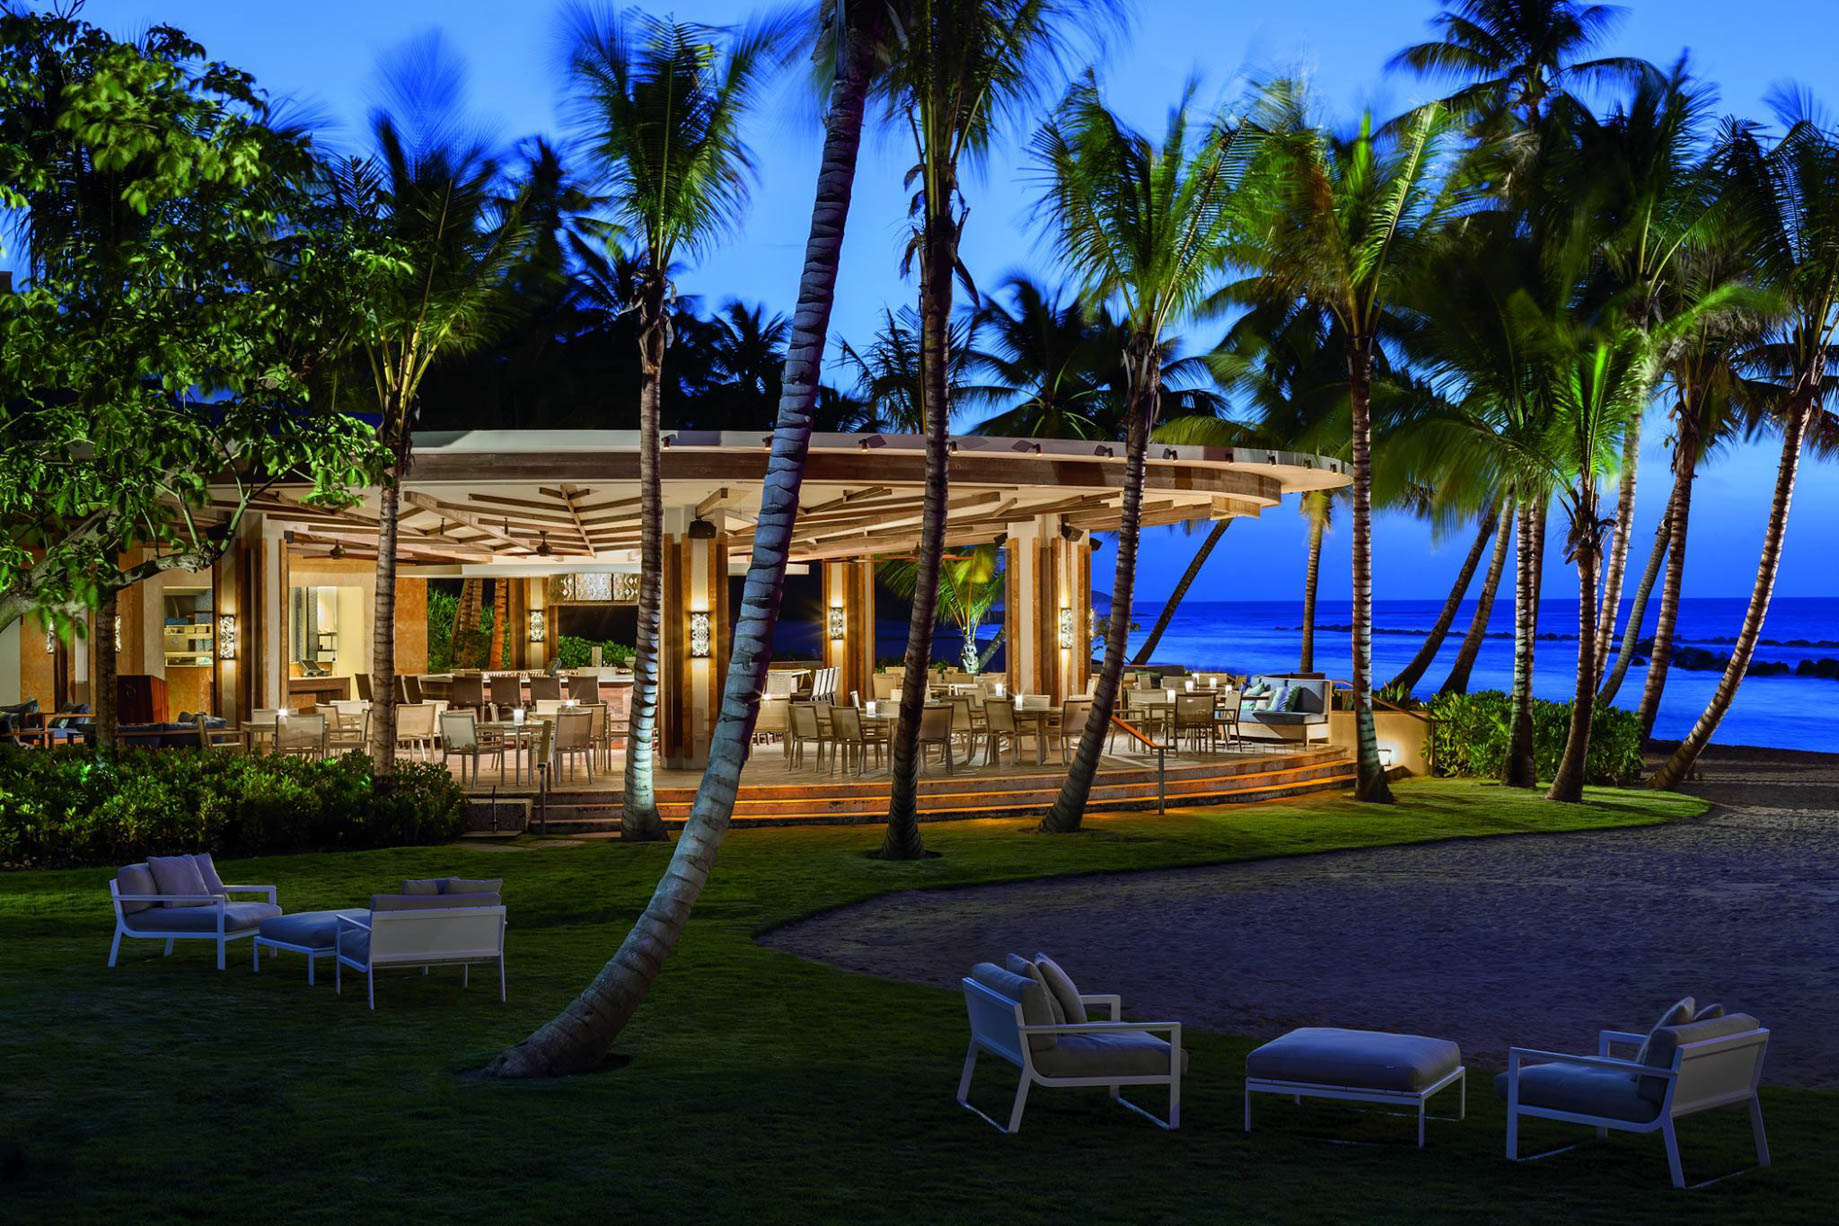 The Ritz-Carlton, Dorado Beach Reserve Resort – Puerto Rico – Encanto Beach Club Bar and Grill Night View